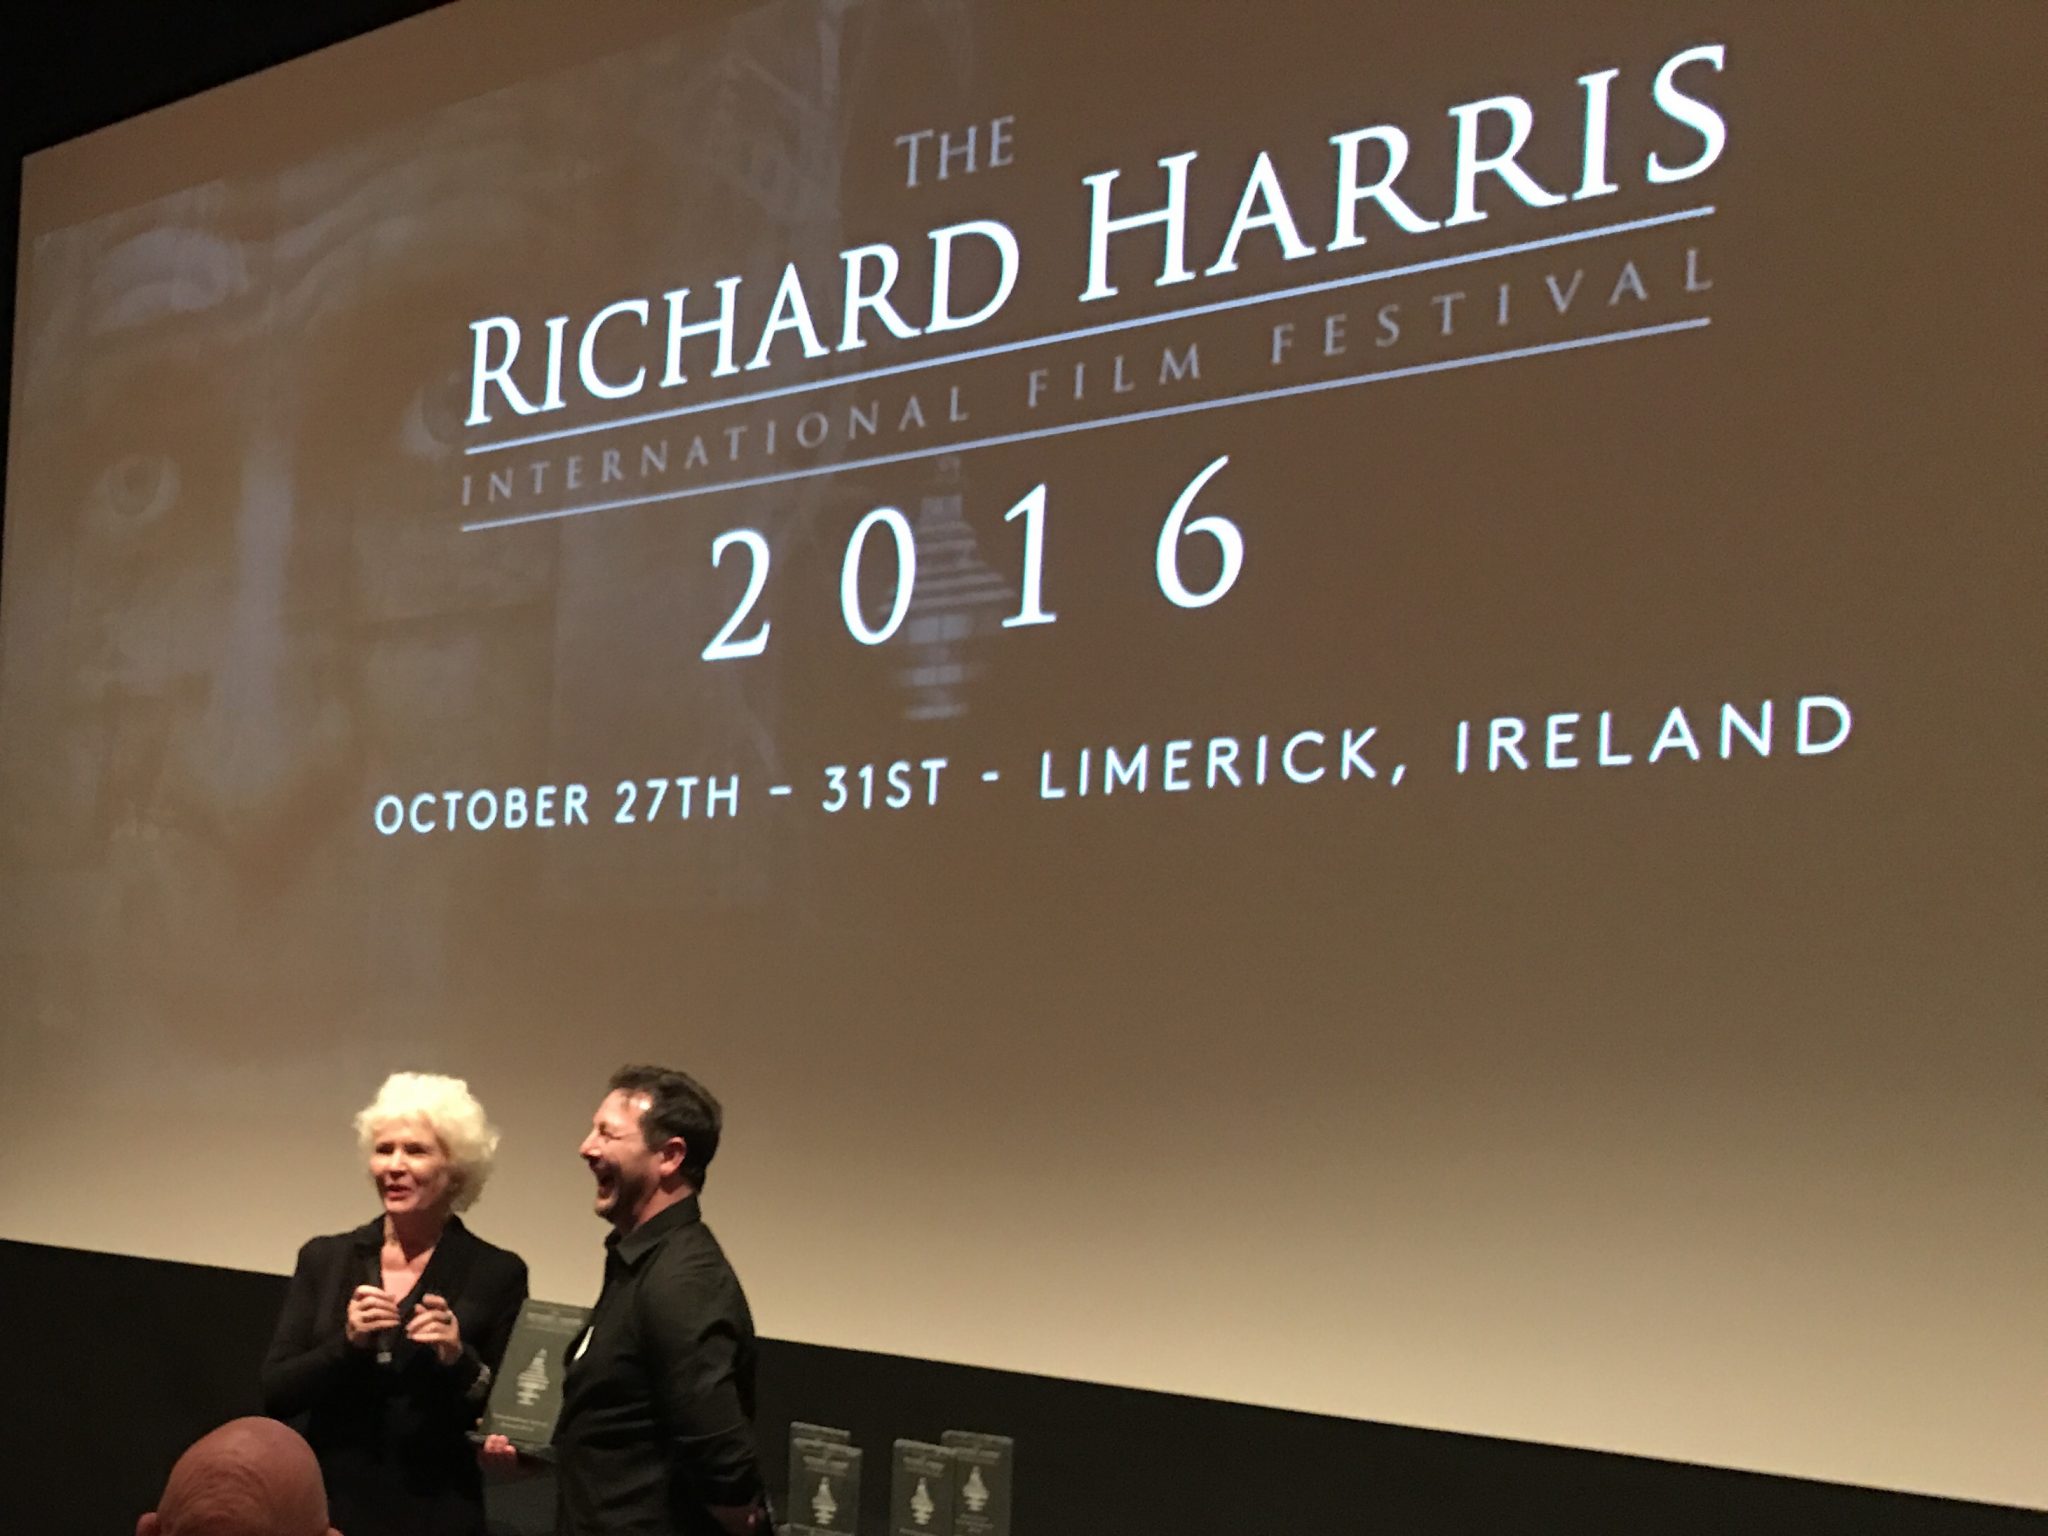 Richard Harris International Film Festival 2016 - Fionnuala Flanagan receiving Outstanding Talent Award